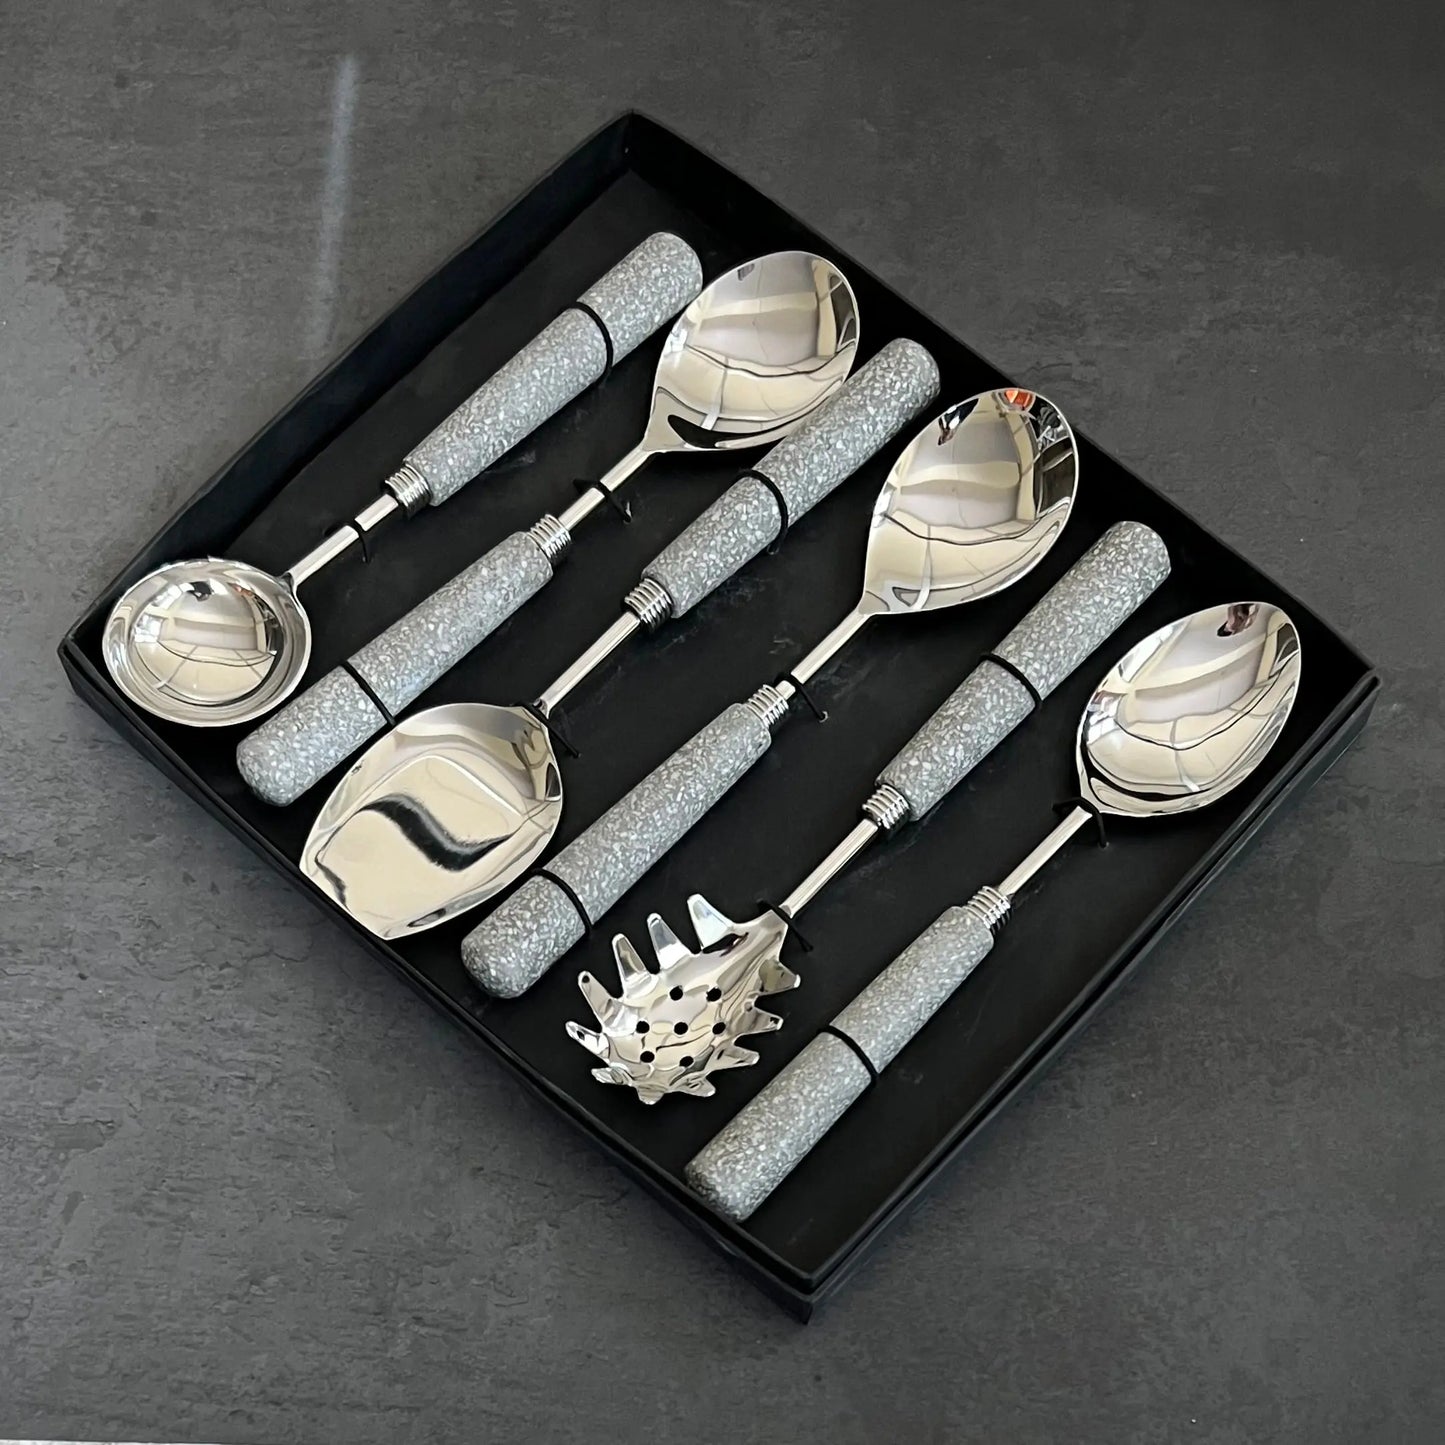 Stone - Serving Spoon Set Ichkan